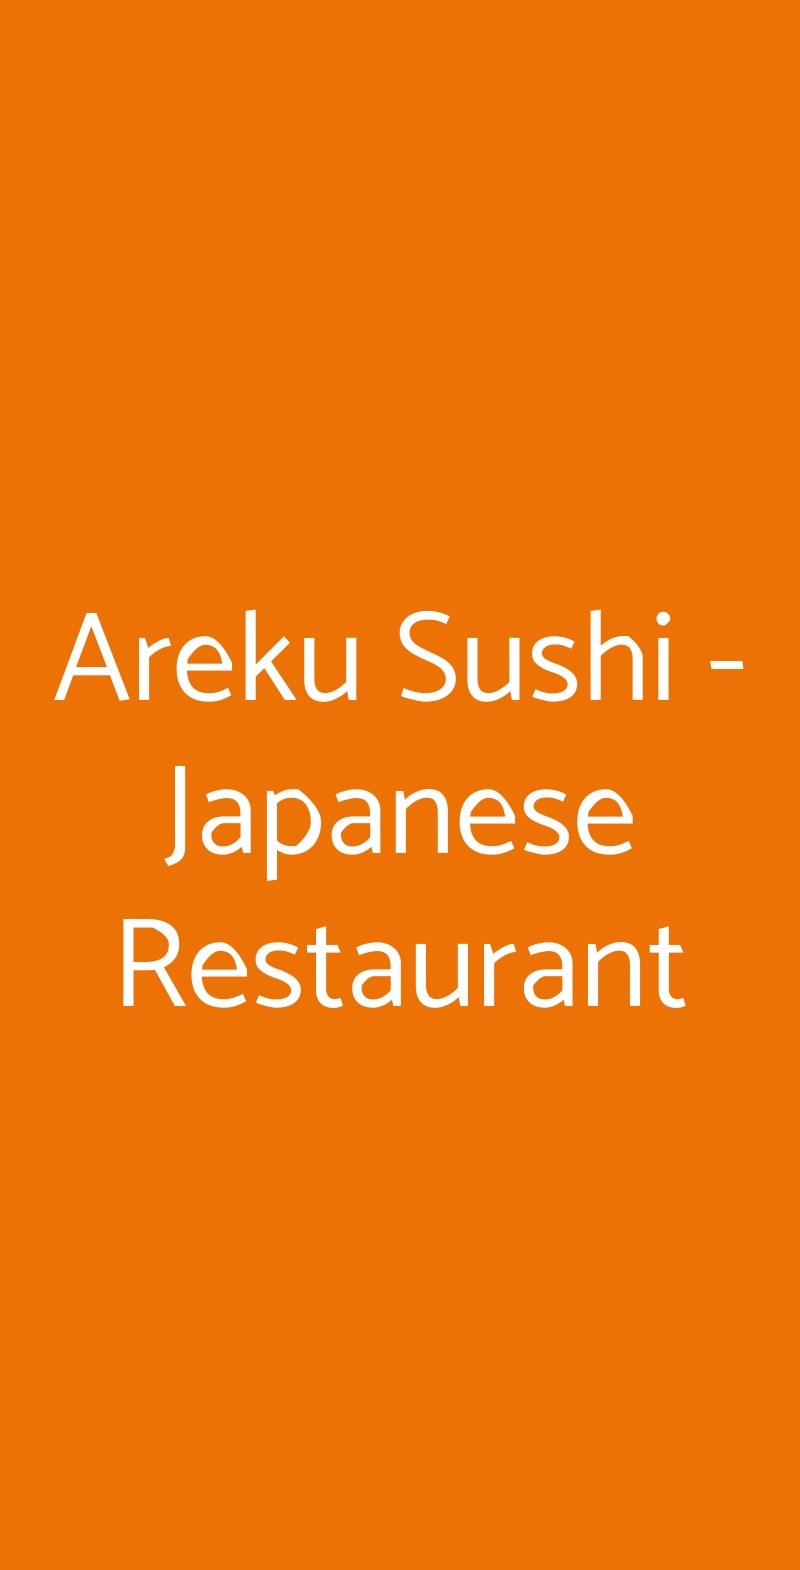 Areku Sushi - Japanese Restaurant Treviso menù 1 pagina